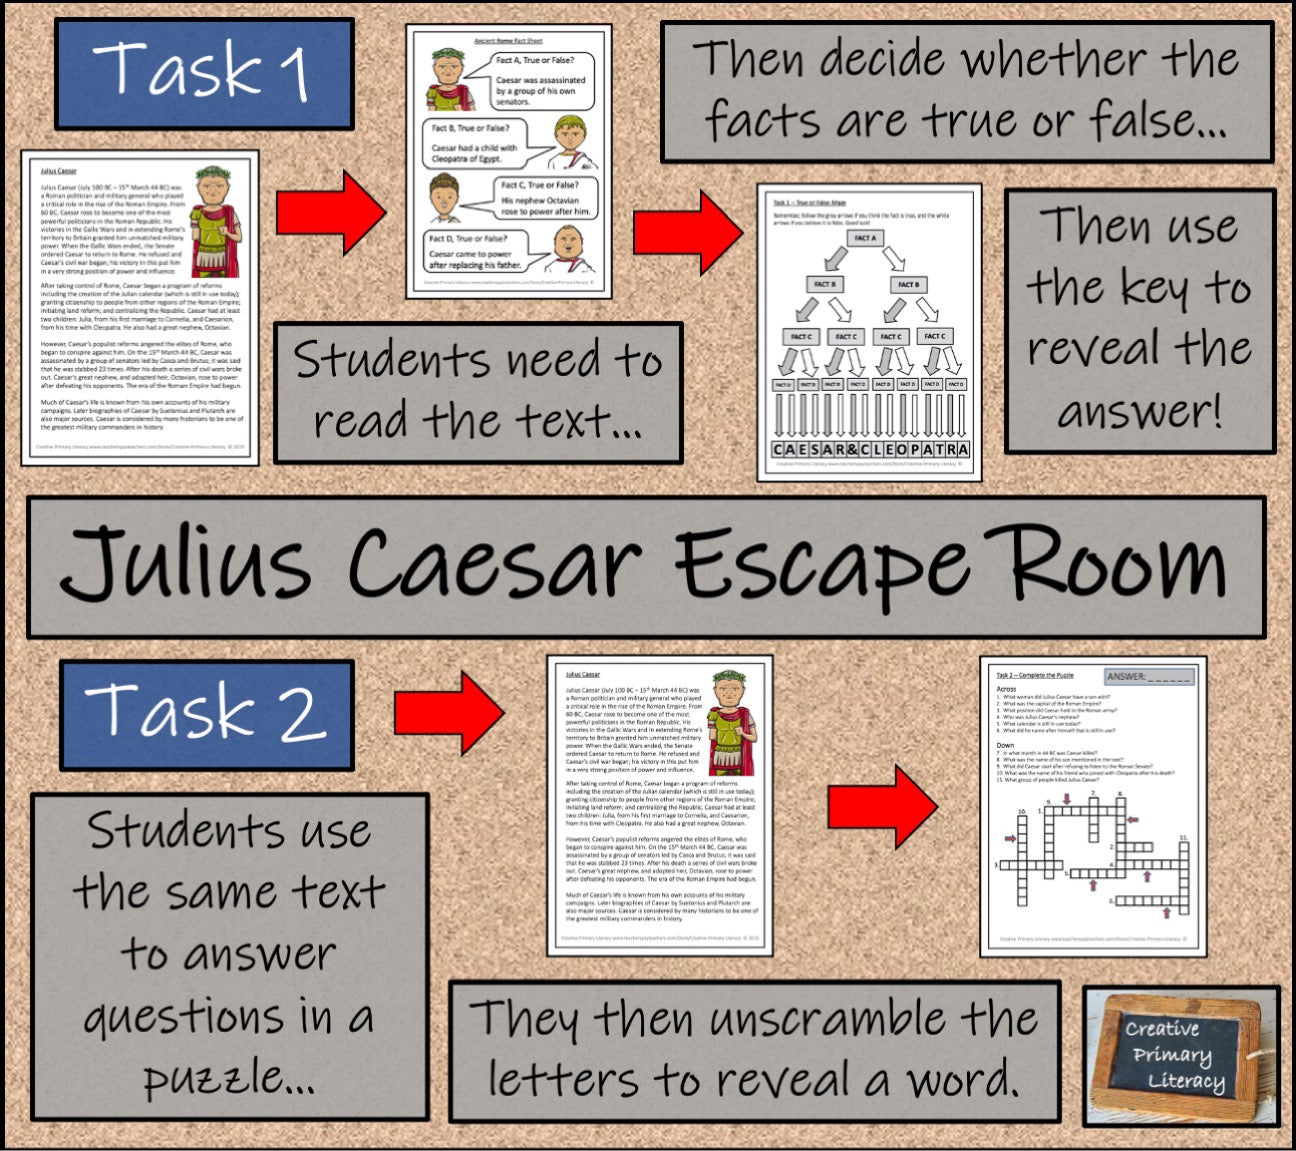 Ancient Rome Escape Room Activity Bundle | 5th Grade & 6th Grade